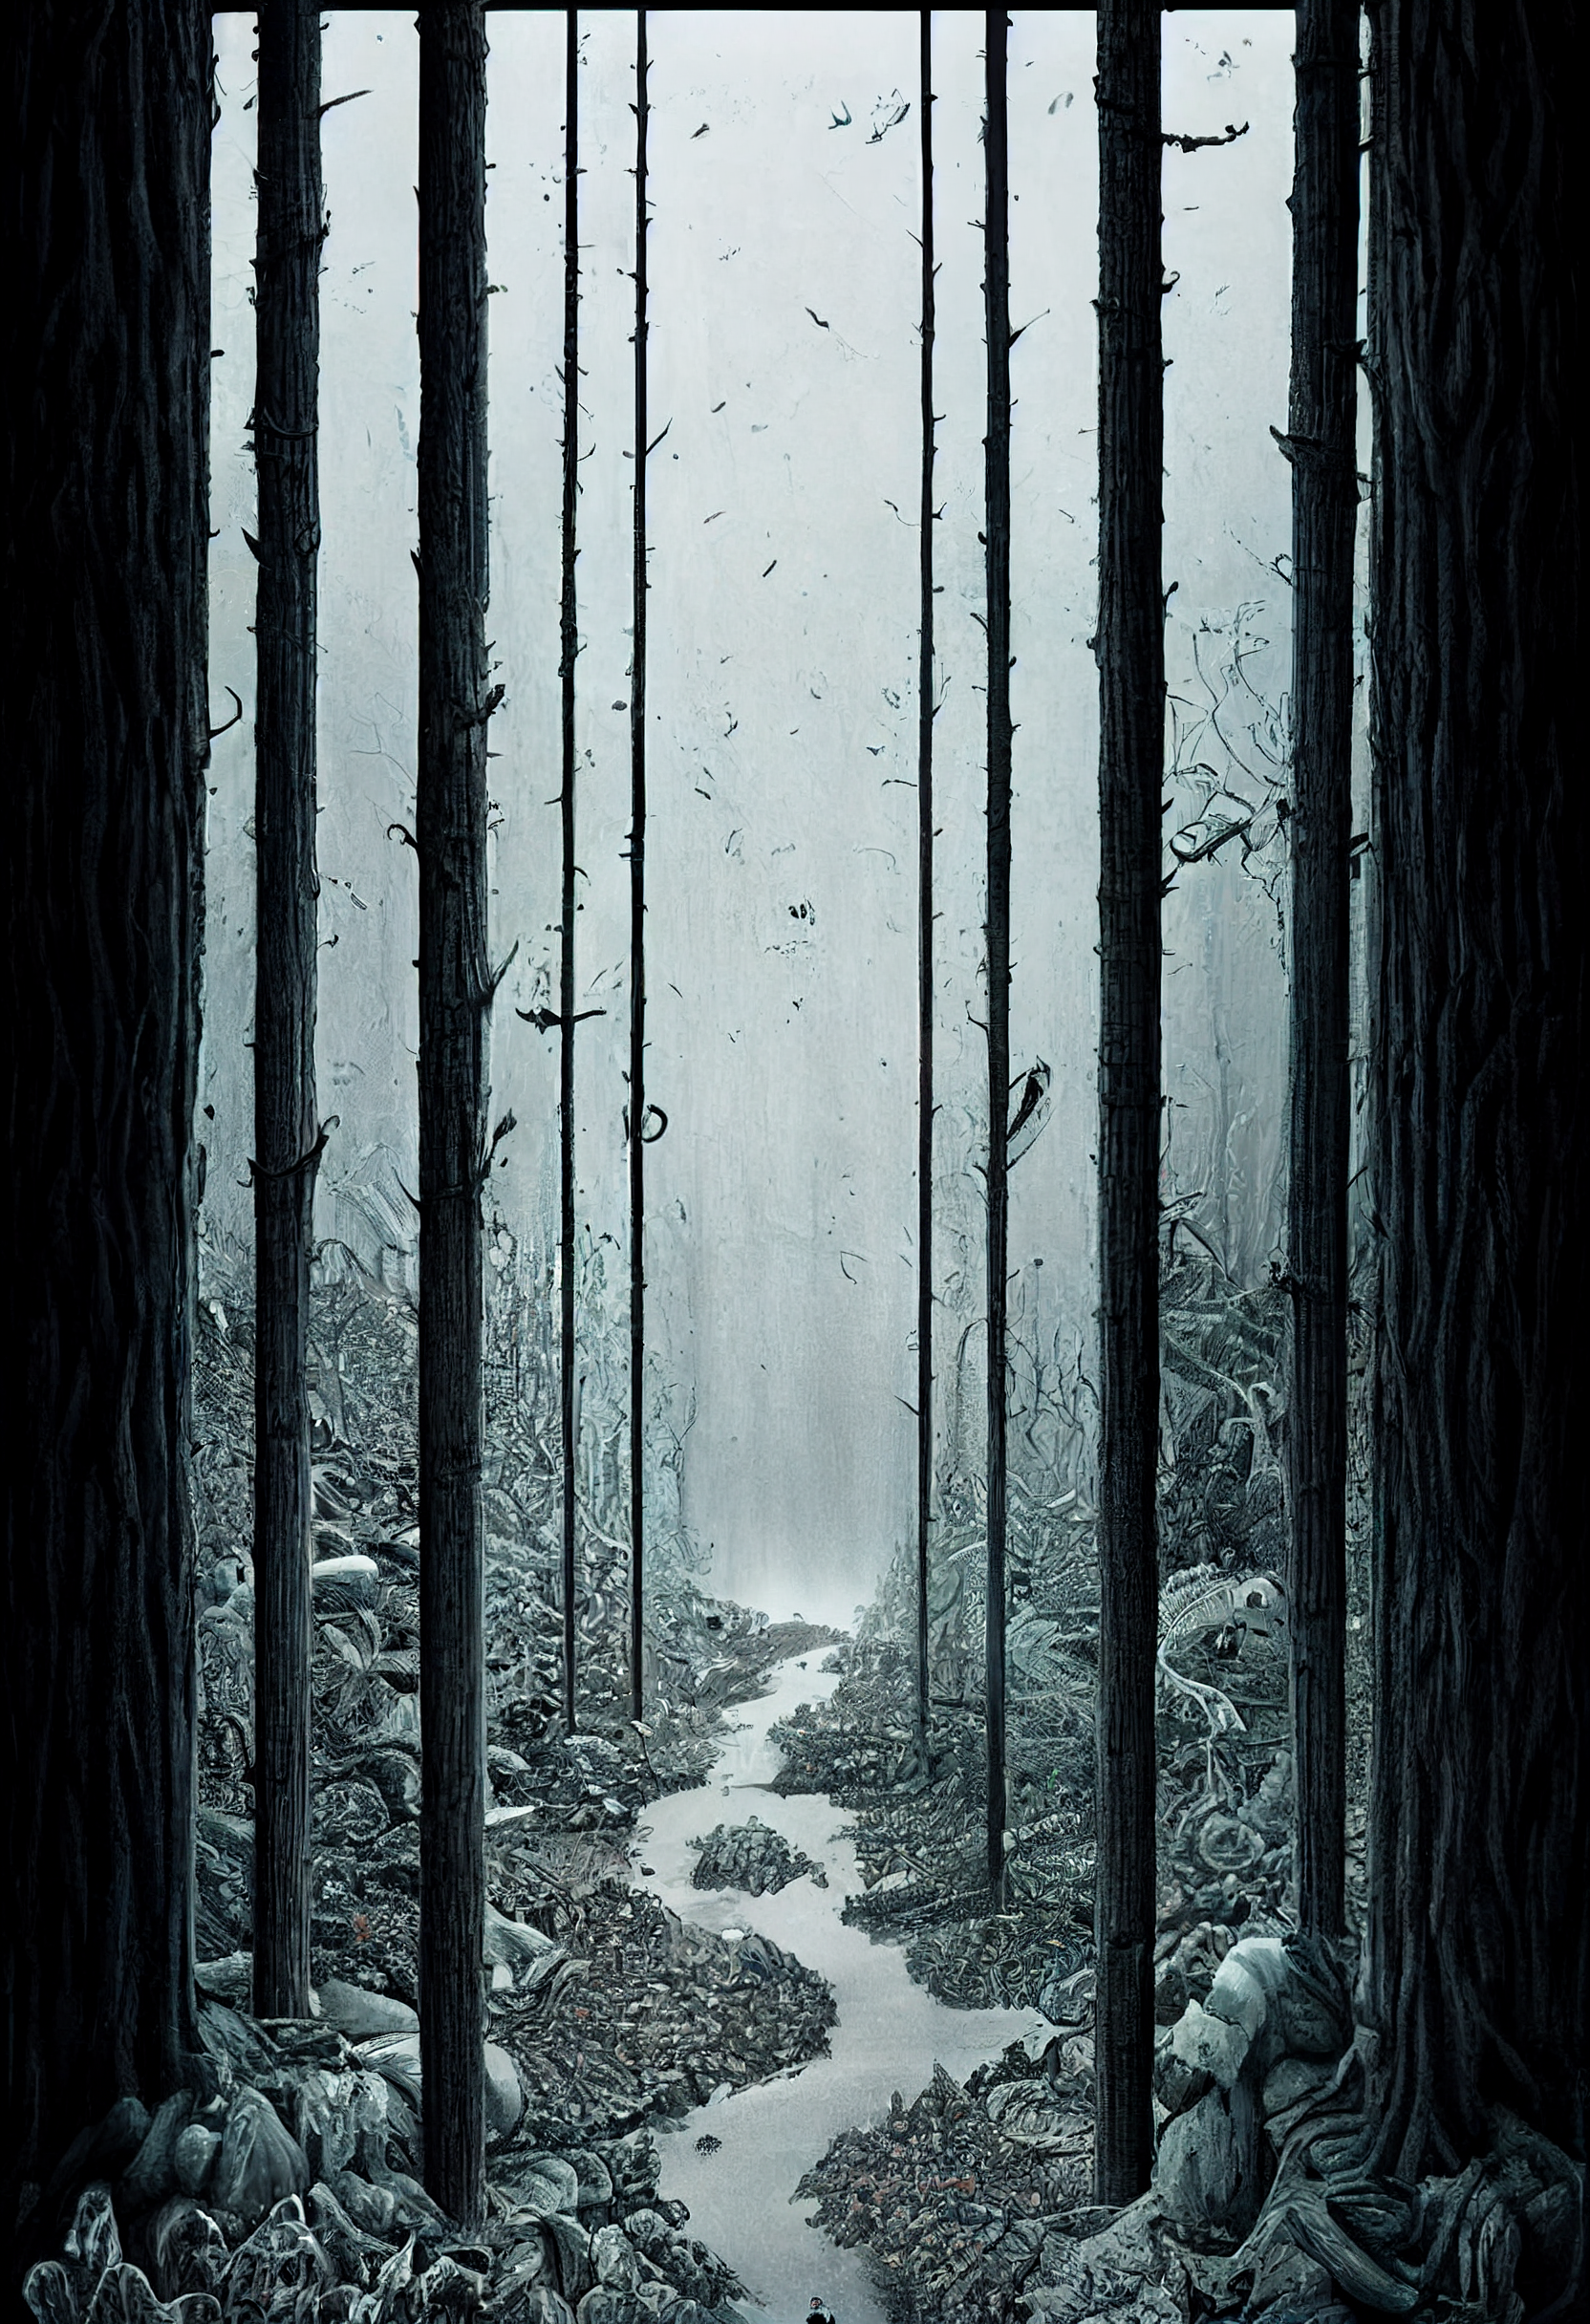 Fairytale forest after an apocalypse